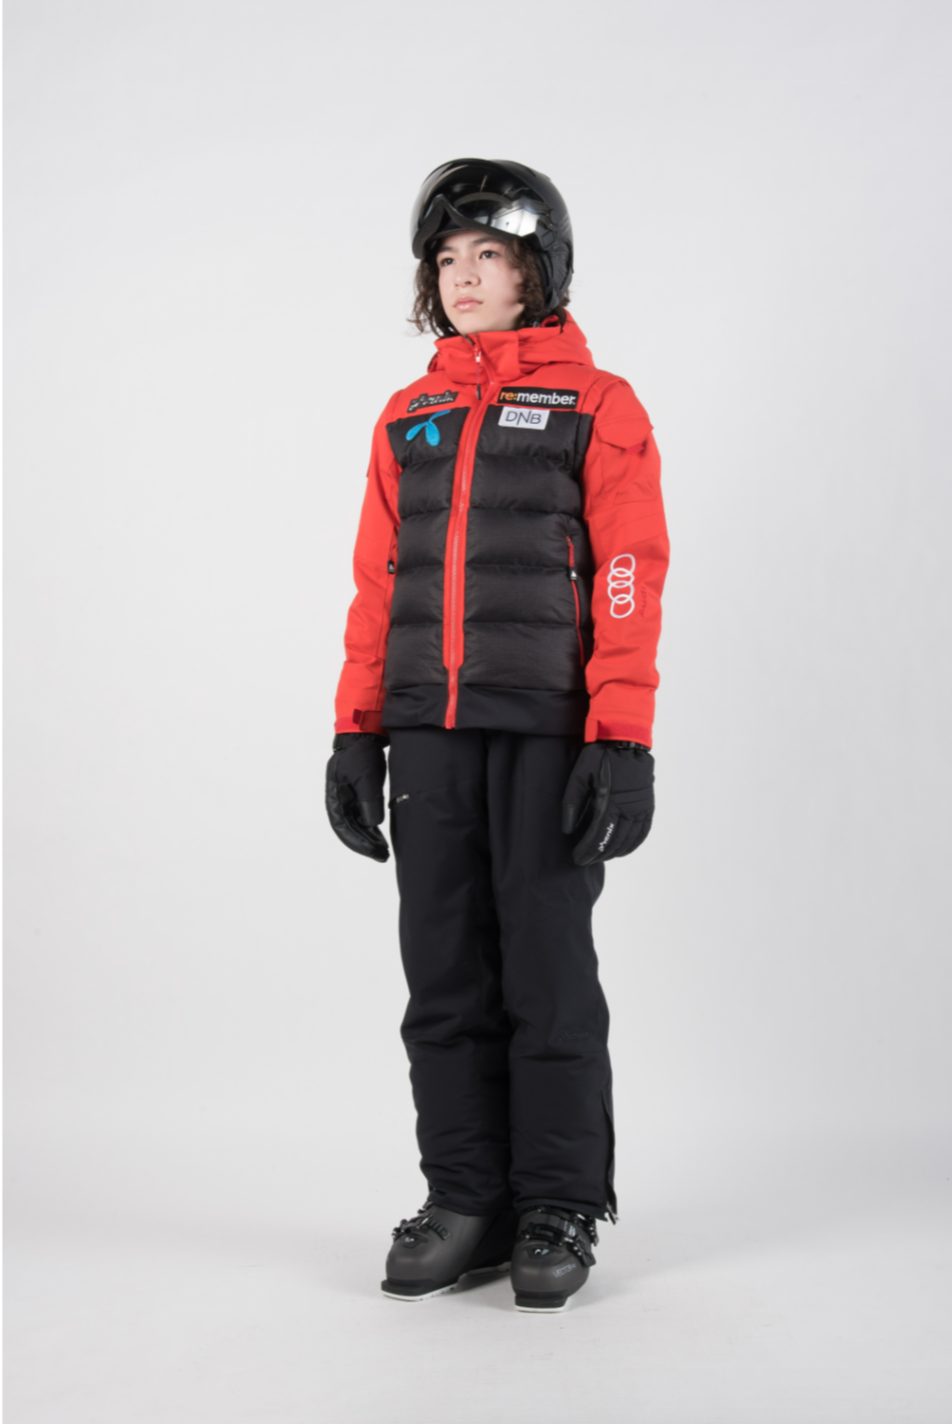 Phenix Boy's Norway Team Jacket 2022